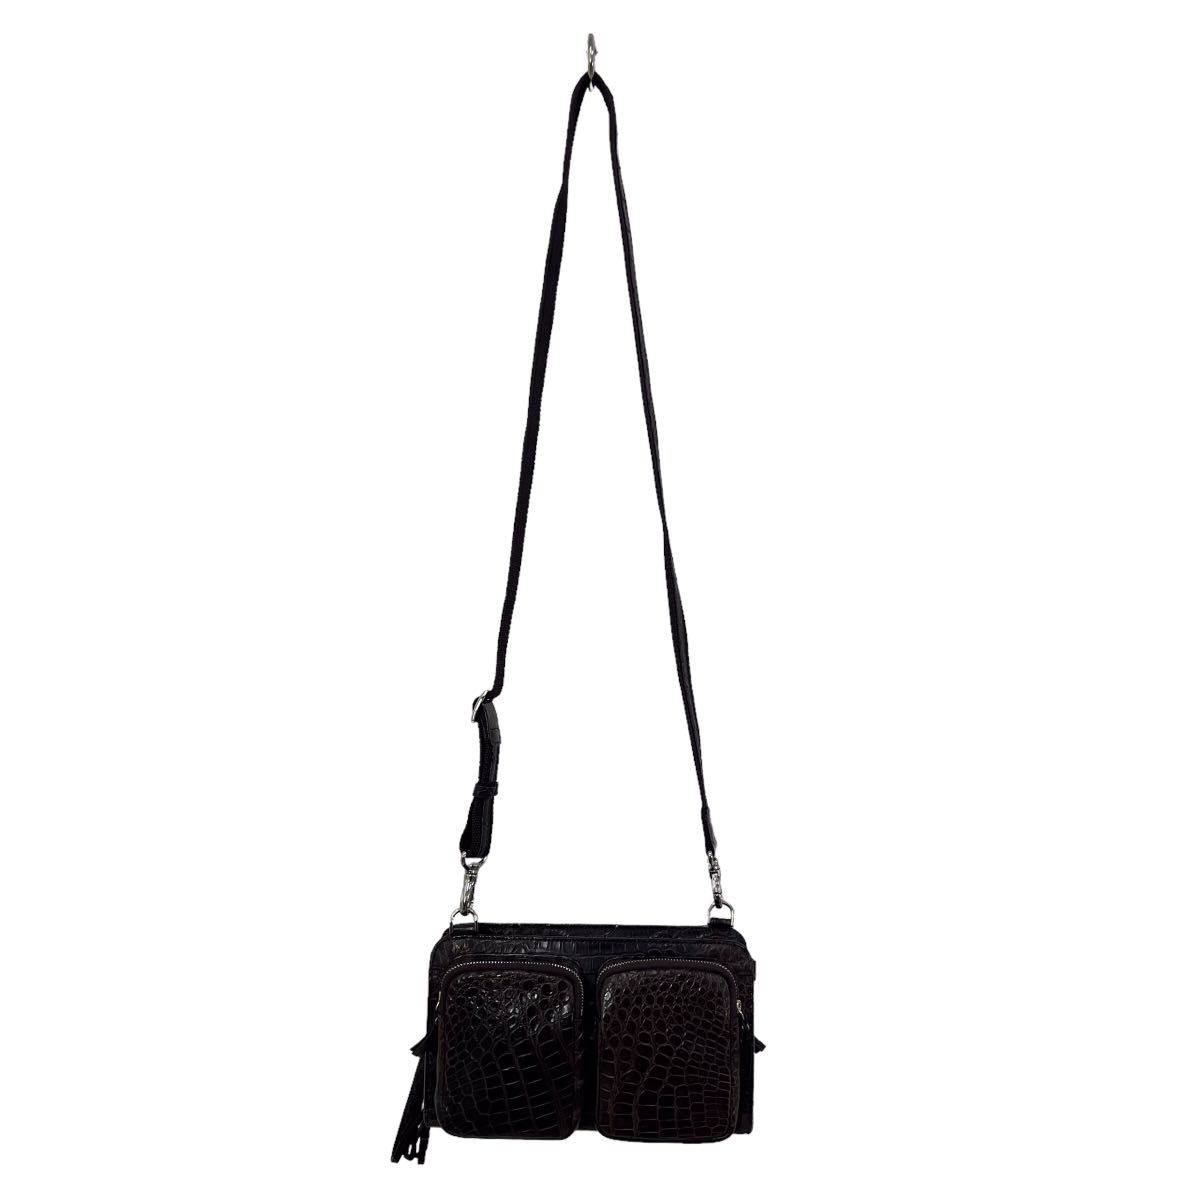 D490 クロコ マットクロコ クロコダイル ショルダーバッグ レザー 肩掛け 斜め掛け かばん カバン 鞄 バッグ BAG ブラウン ミニバックの画像1